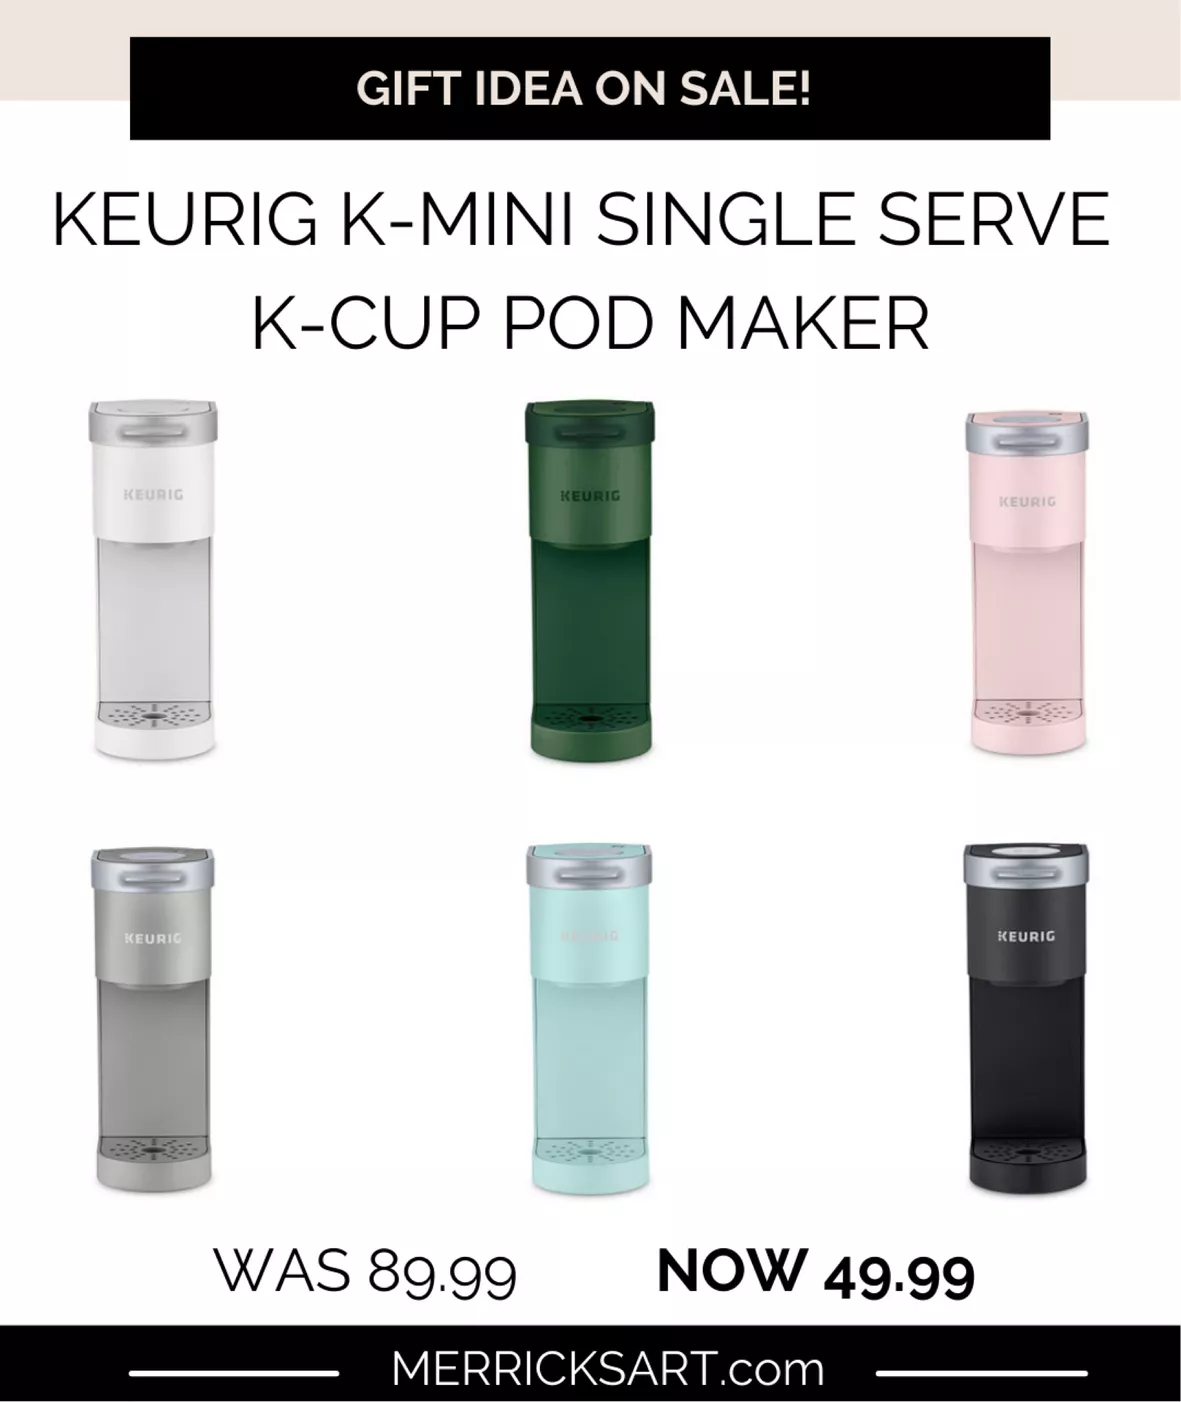 Target has a Keurig Single-Serve K-Mini for $49.99